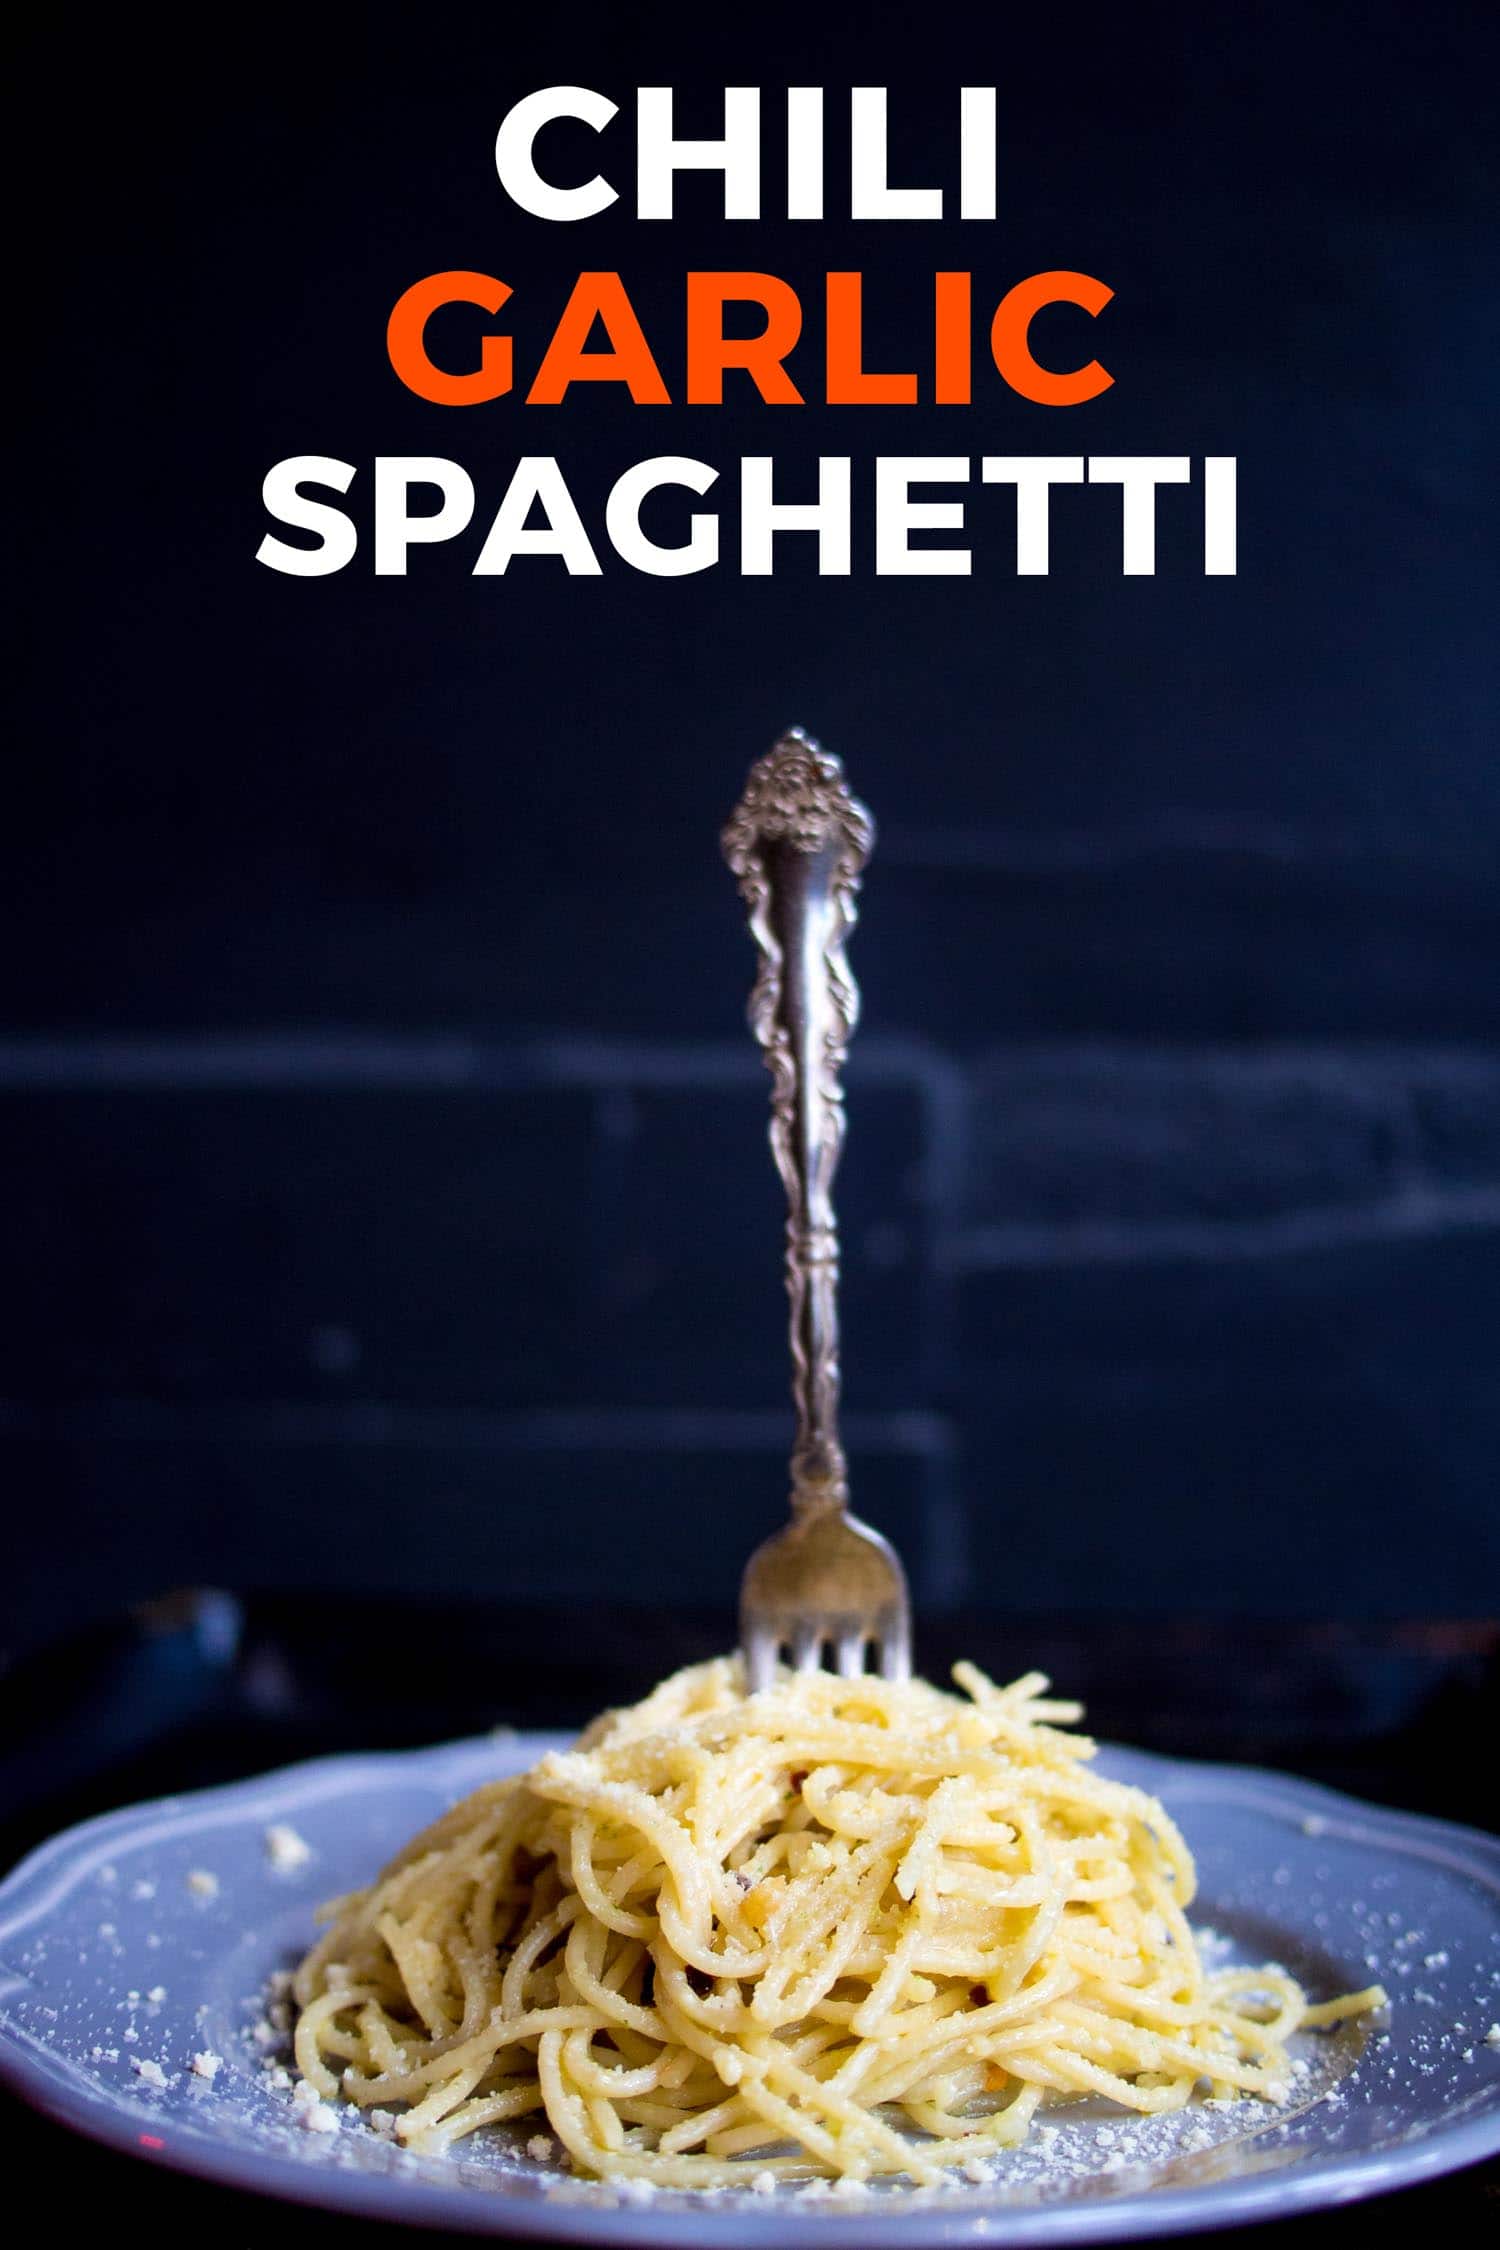 Chili garlic parmesan spaghetti on a blue plate on a rustic background.